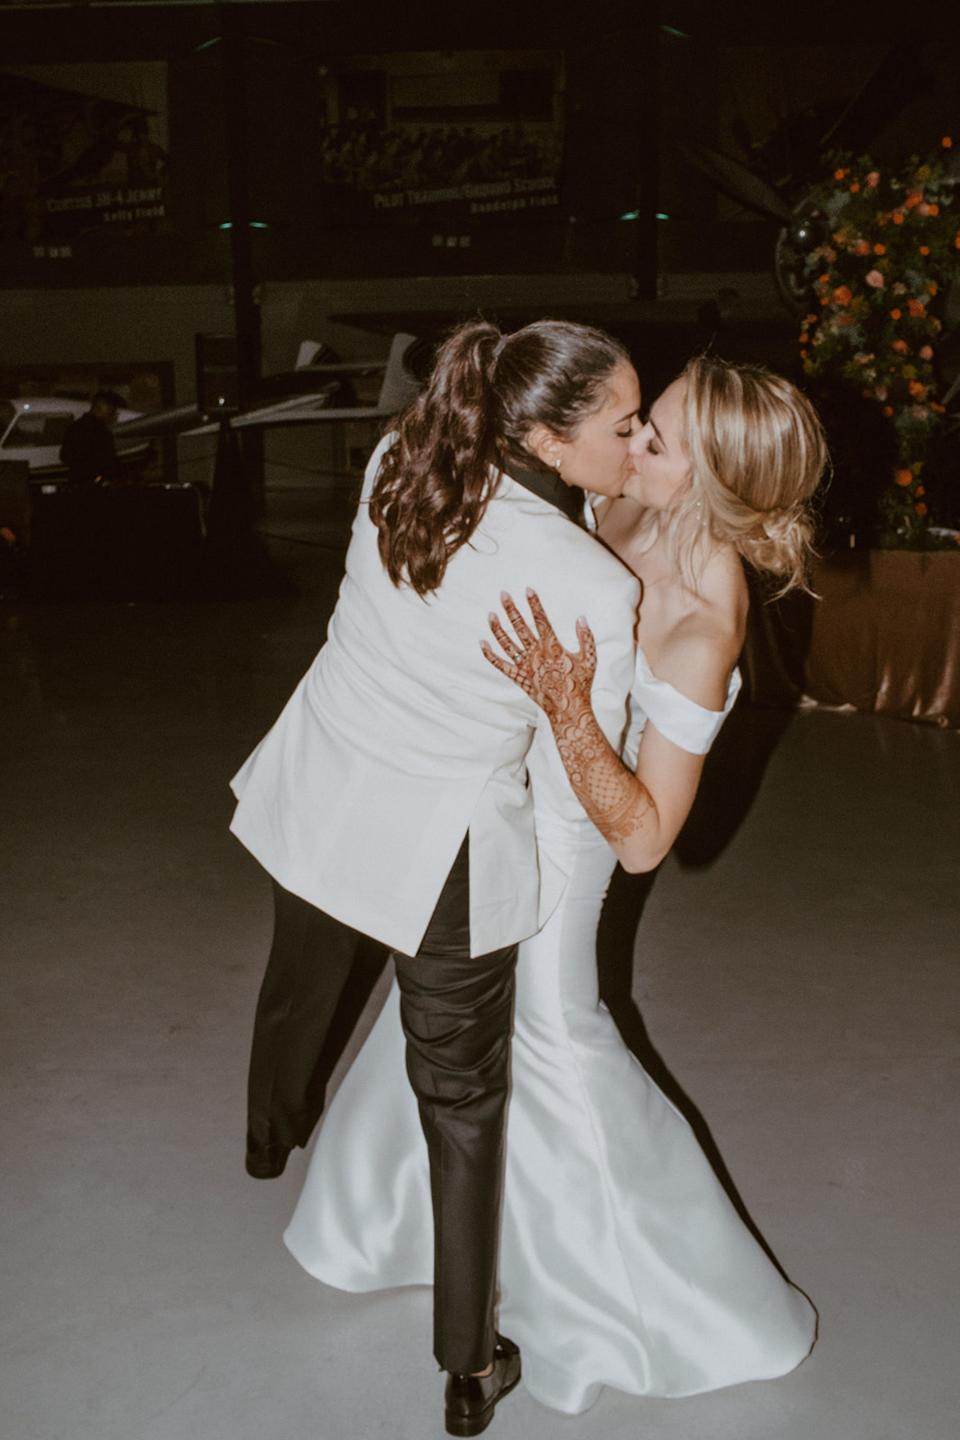 Two brides kiss on their wedding day.